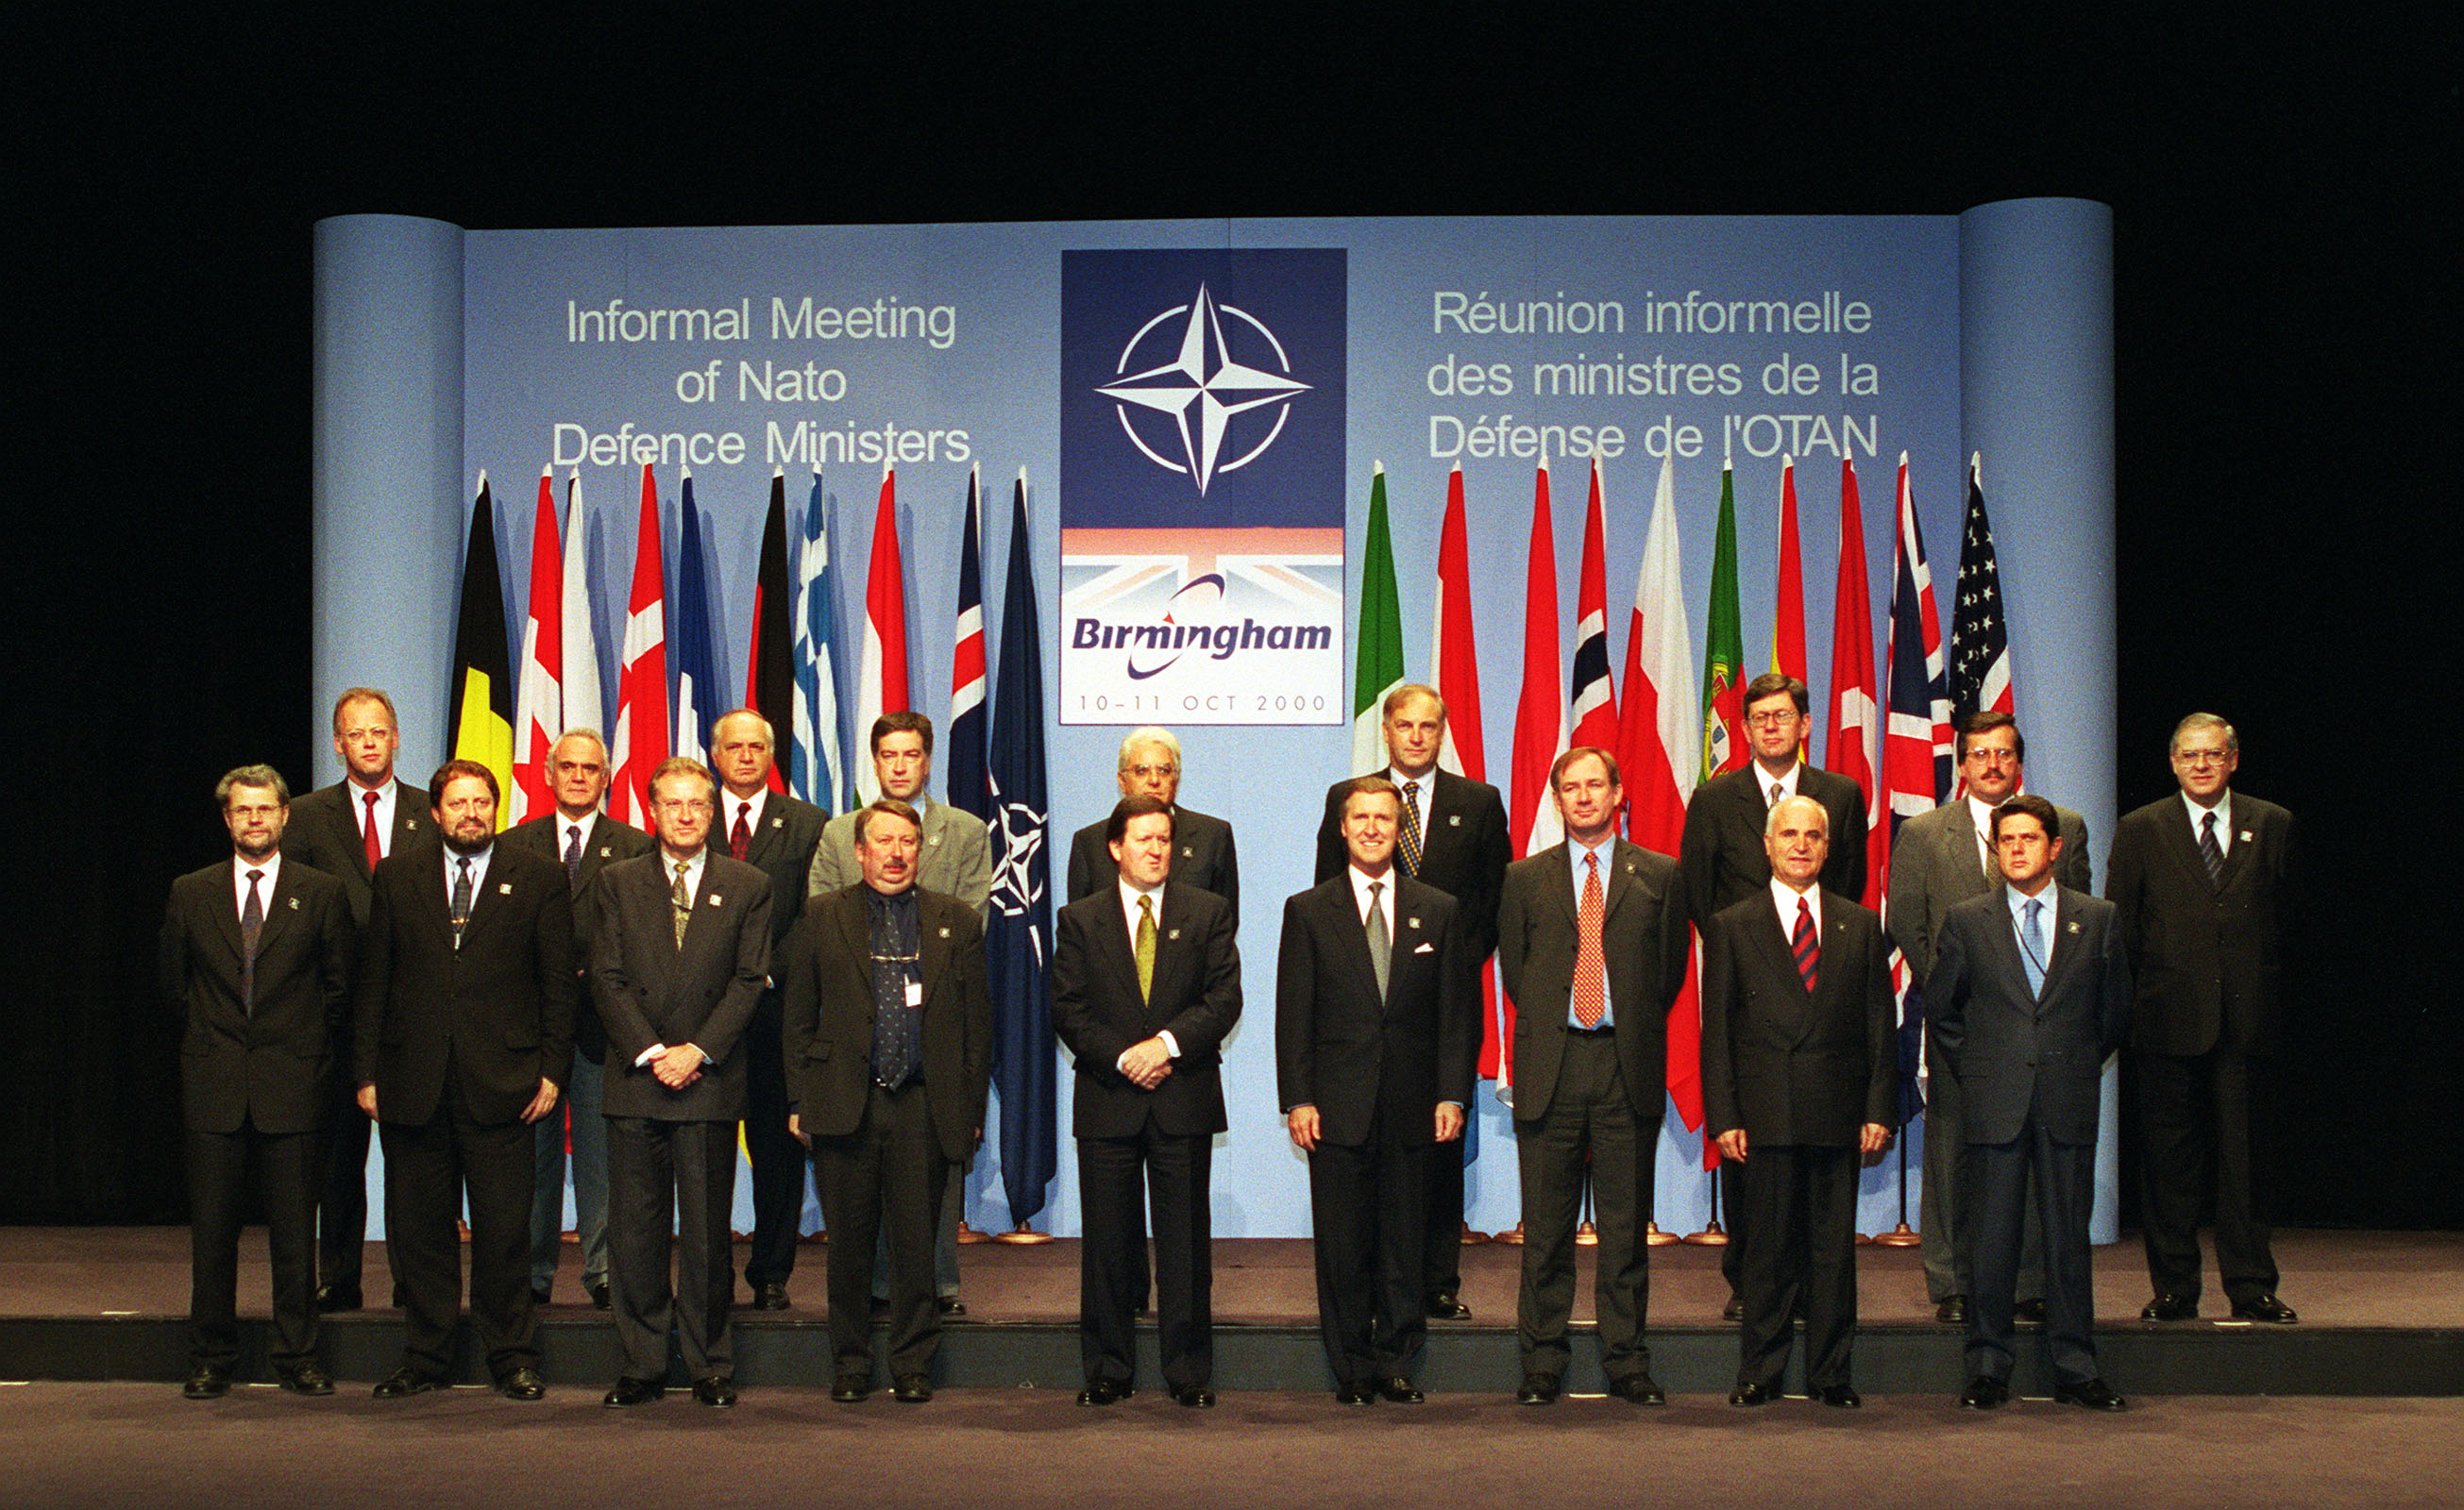 https://upload.wikimedia.org/wikipedia/commons/c/ce/Defense_ministers_of_NATO_2000.jpg